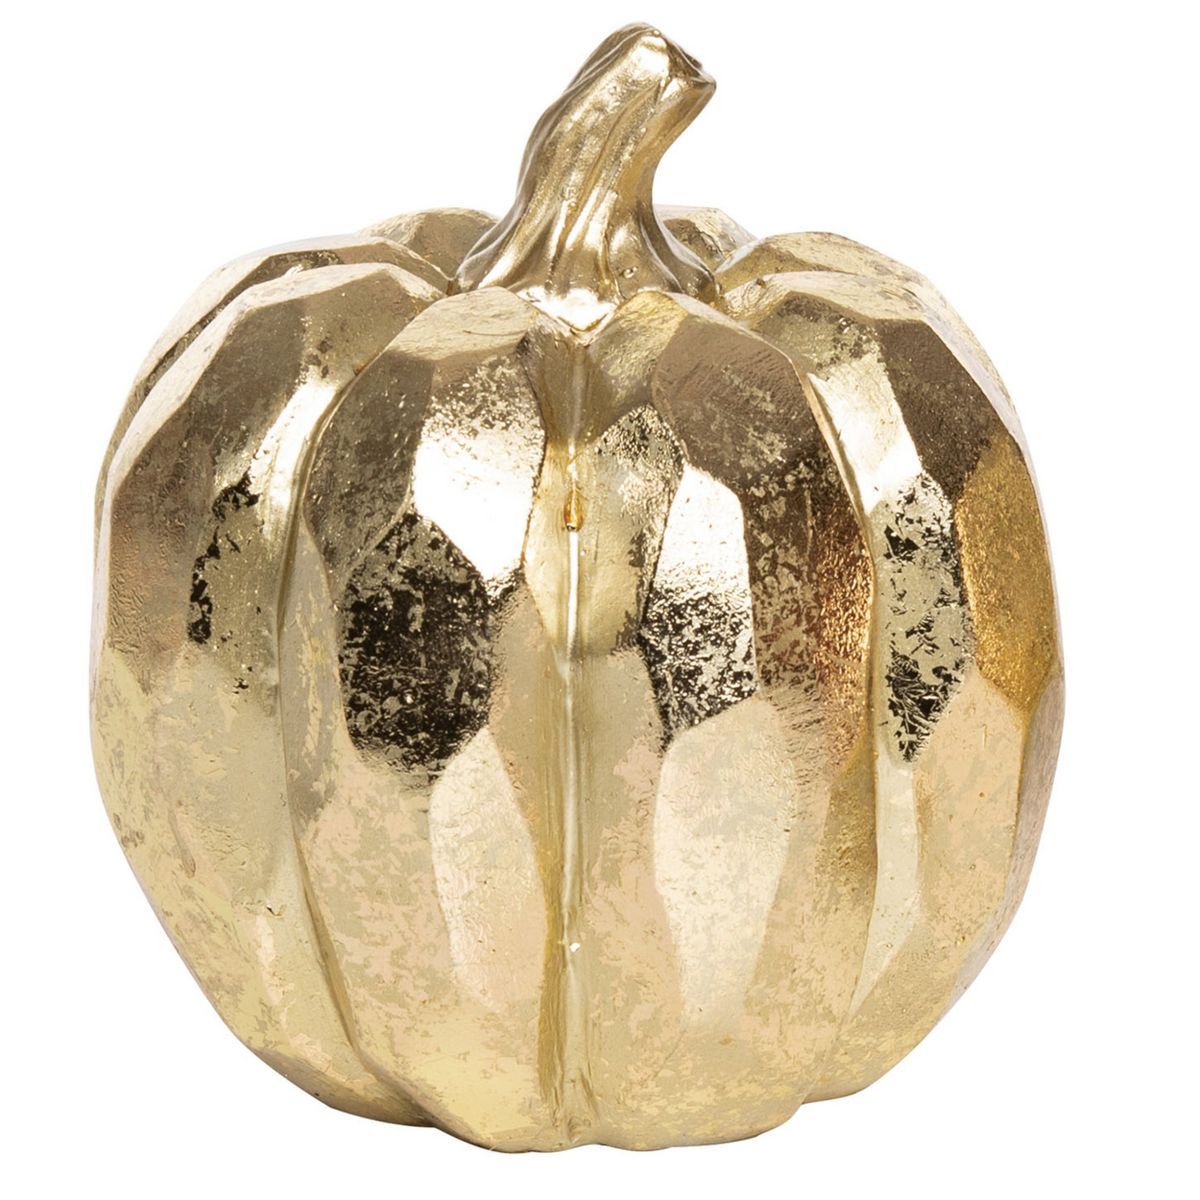 Transpac Resin 5.75 in. Gold Harvest Pumpkins | Target